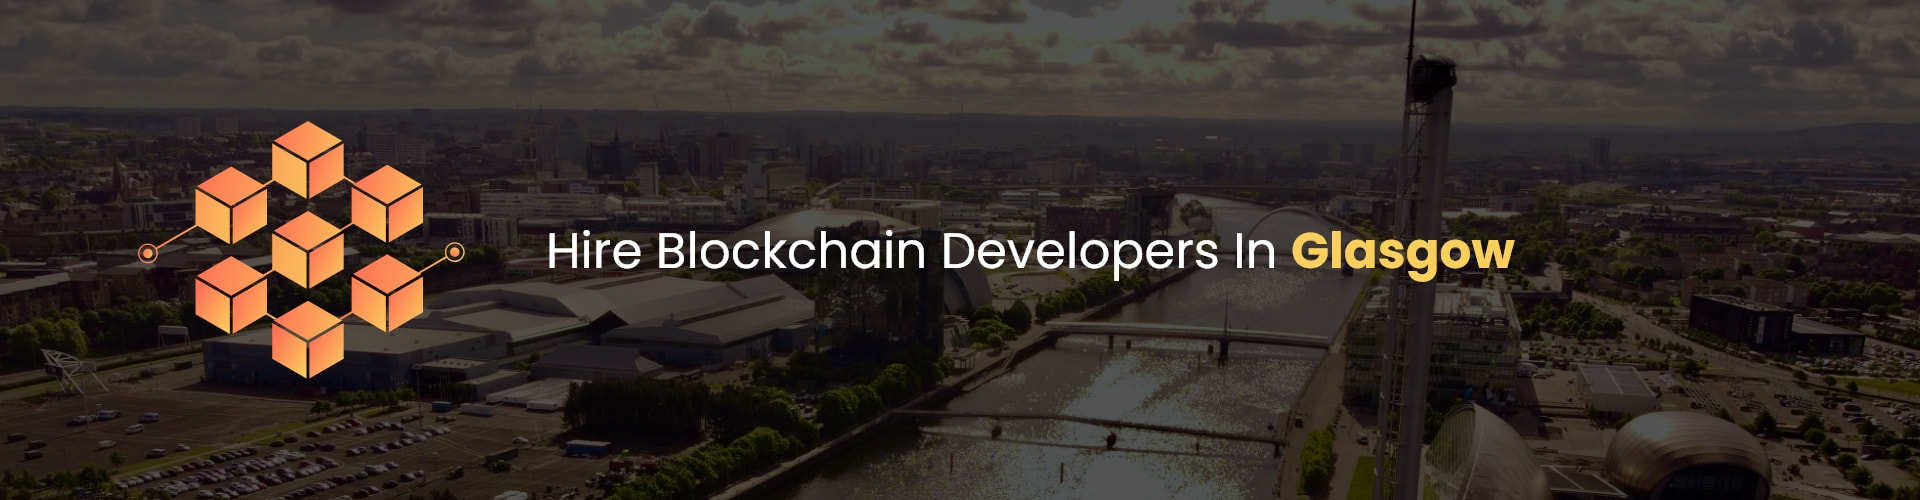 hire blockchain developers in glasgow